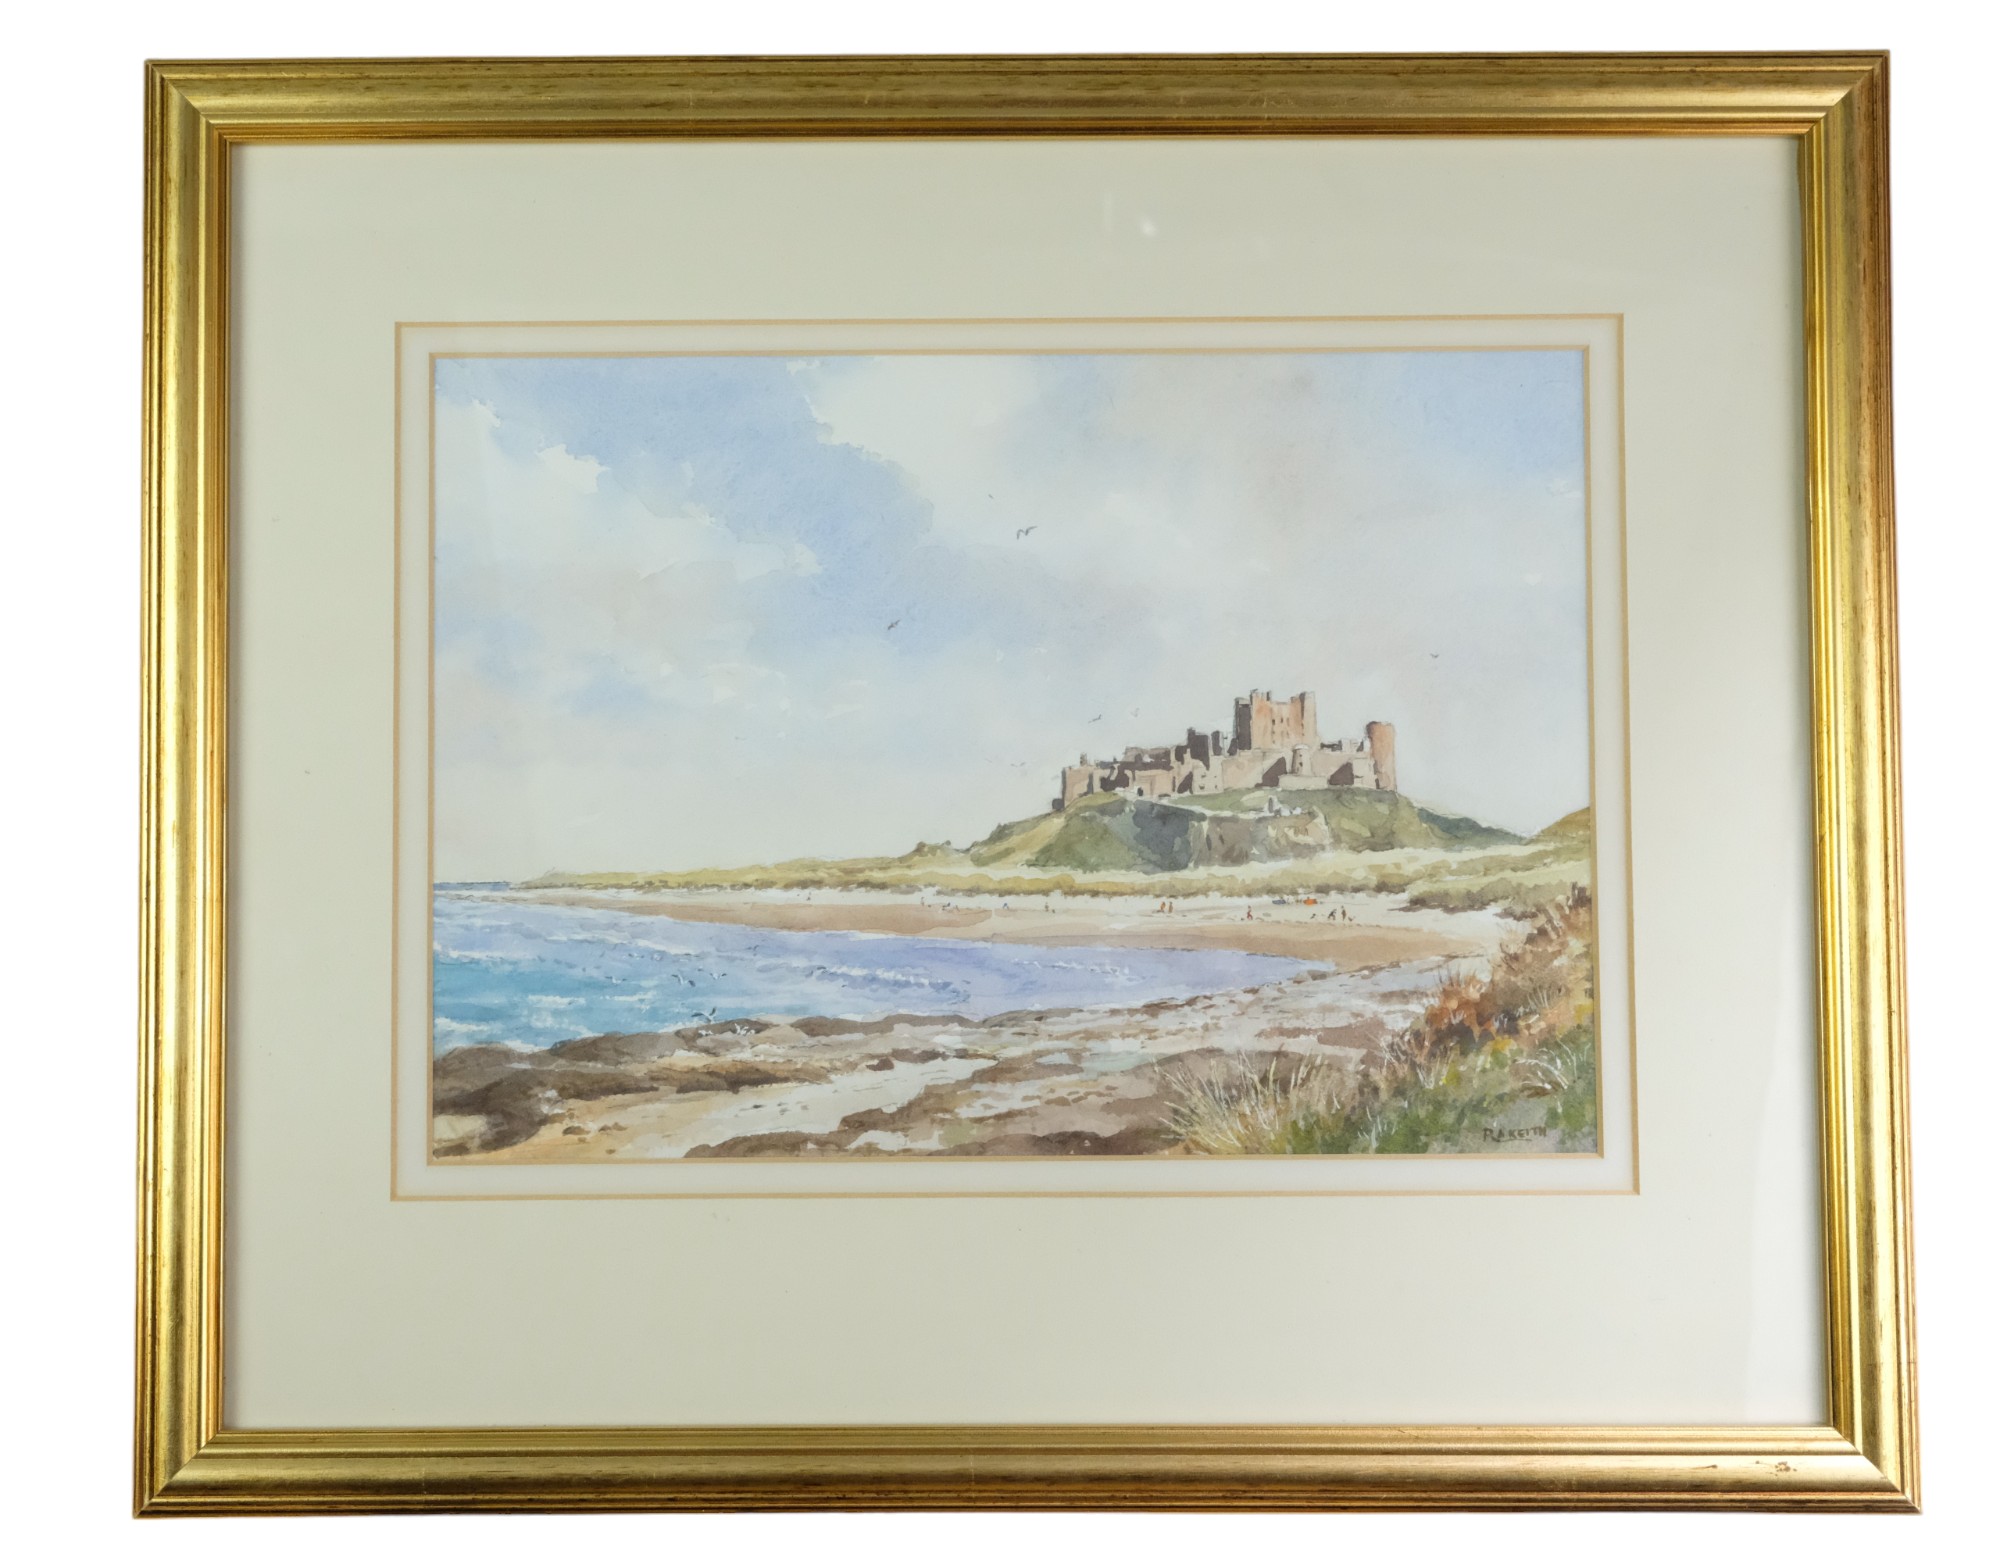 Robert A Keith (Cumbria, Contemporary) "Bamburgh Castle, Northumberland", a broad, blissful, coastal